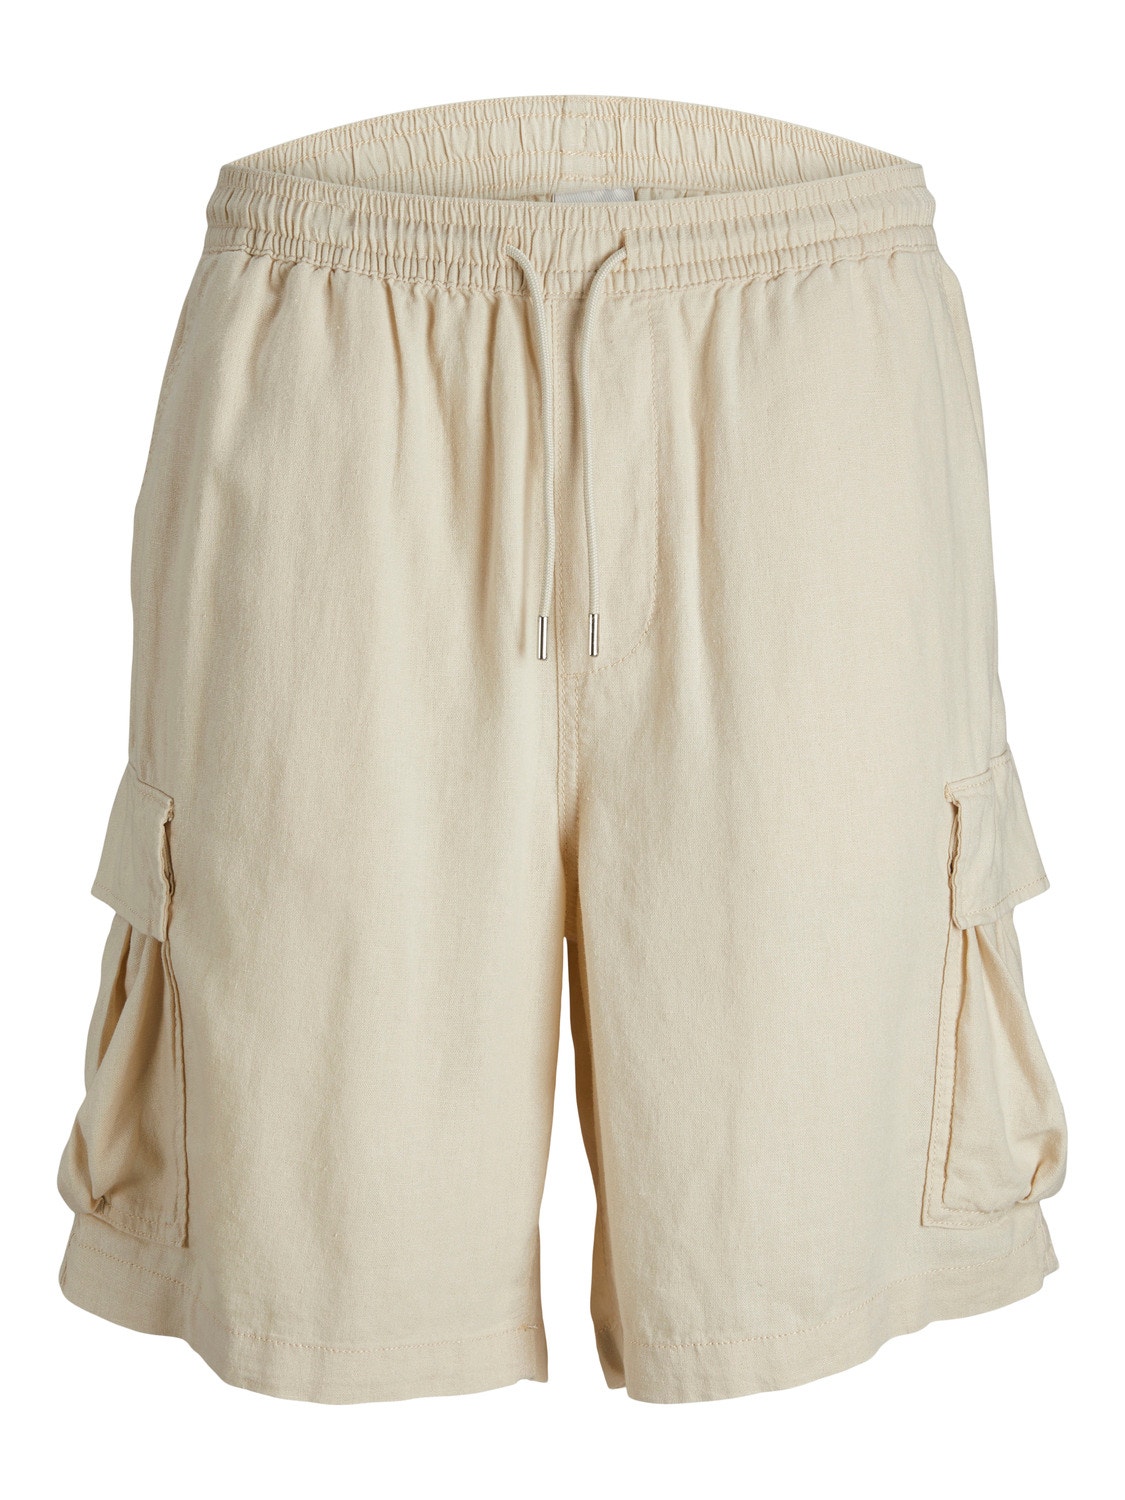 Jack & Jones Loose Fit Cargo shorts -Summer Sand - 12255605